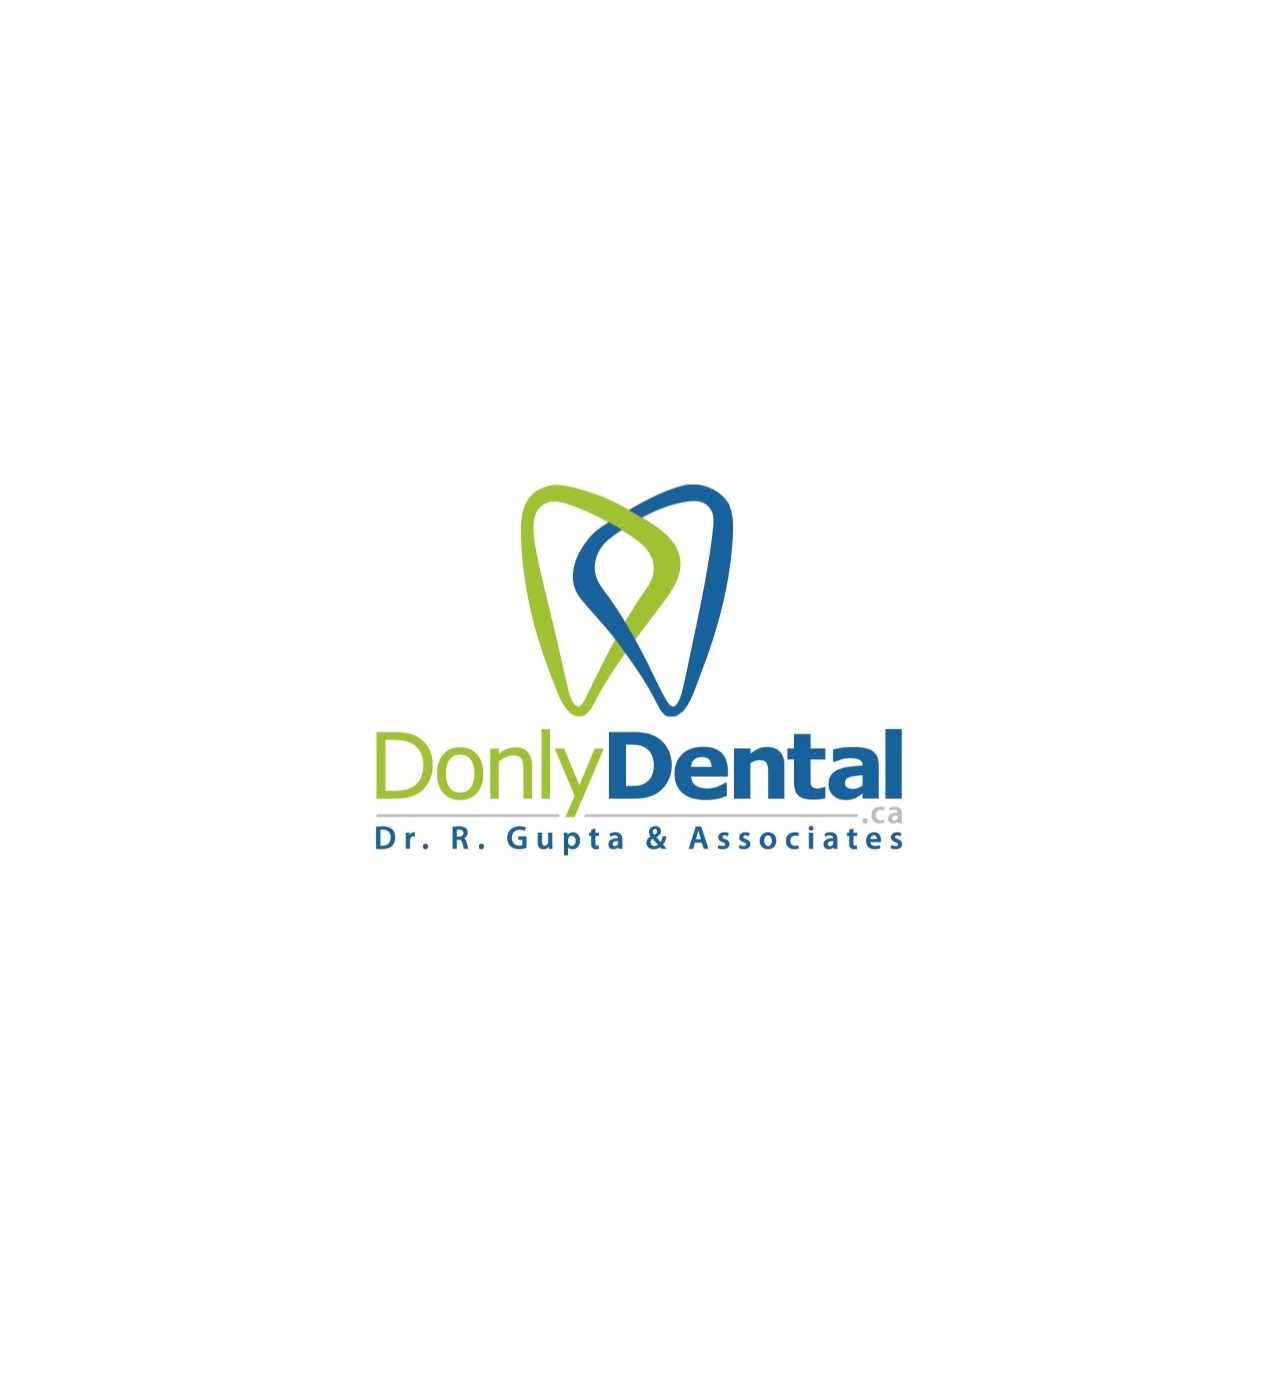 Donly Dental